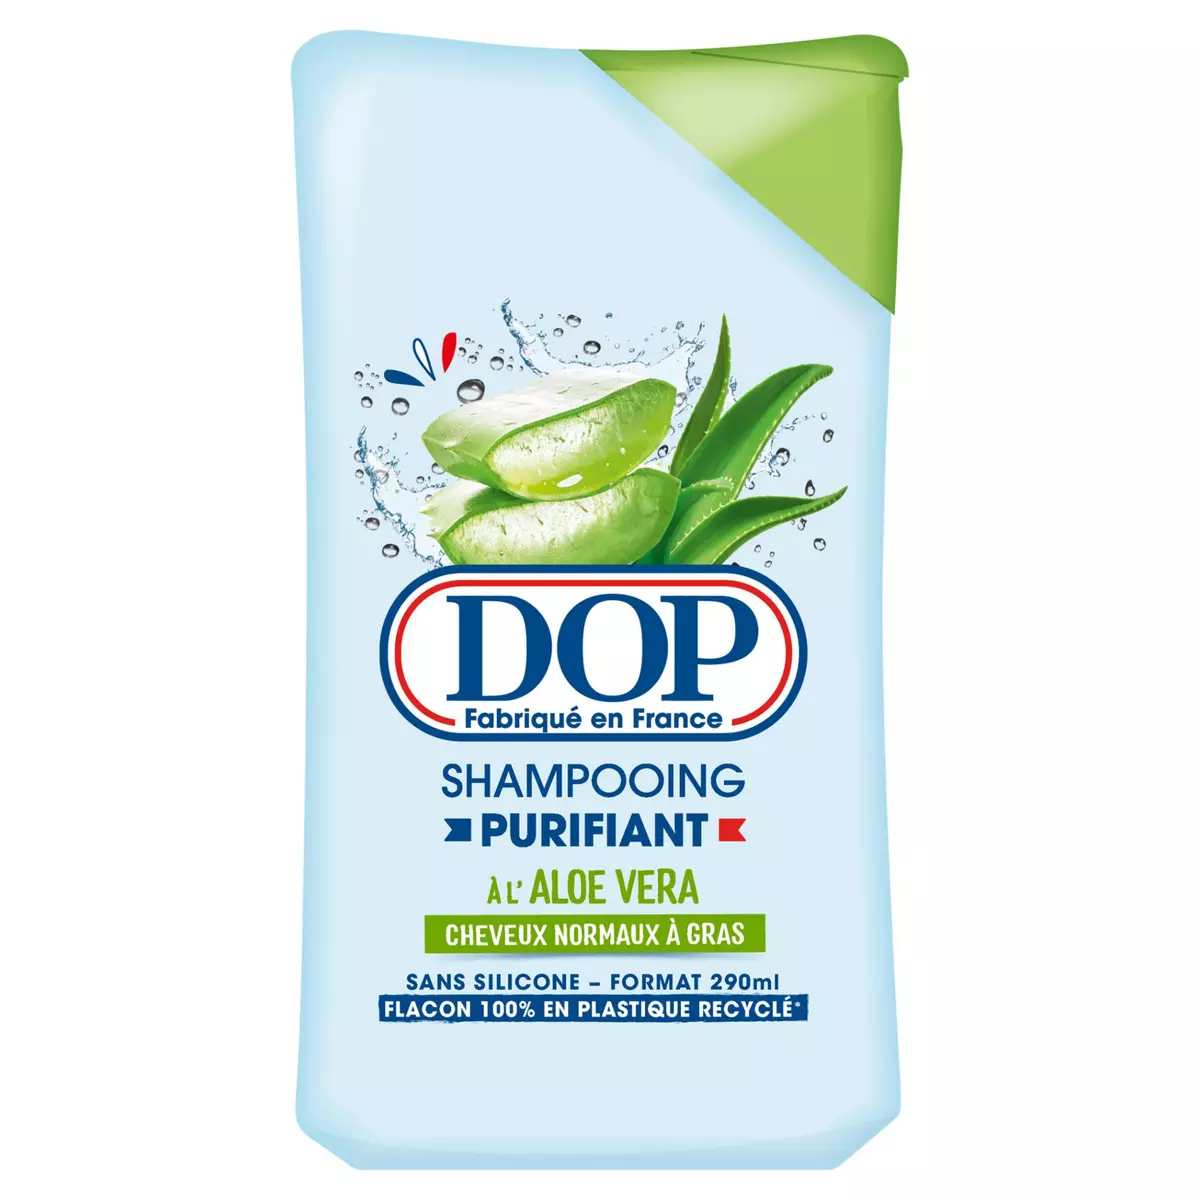 DOP Shampooing purifiant aloe vera cheveux normaux à gras 290ml